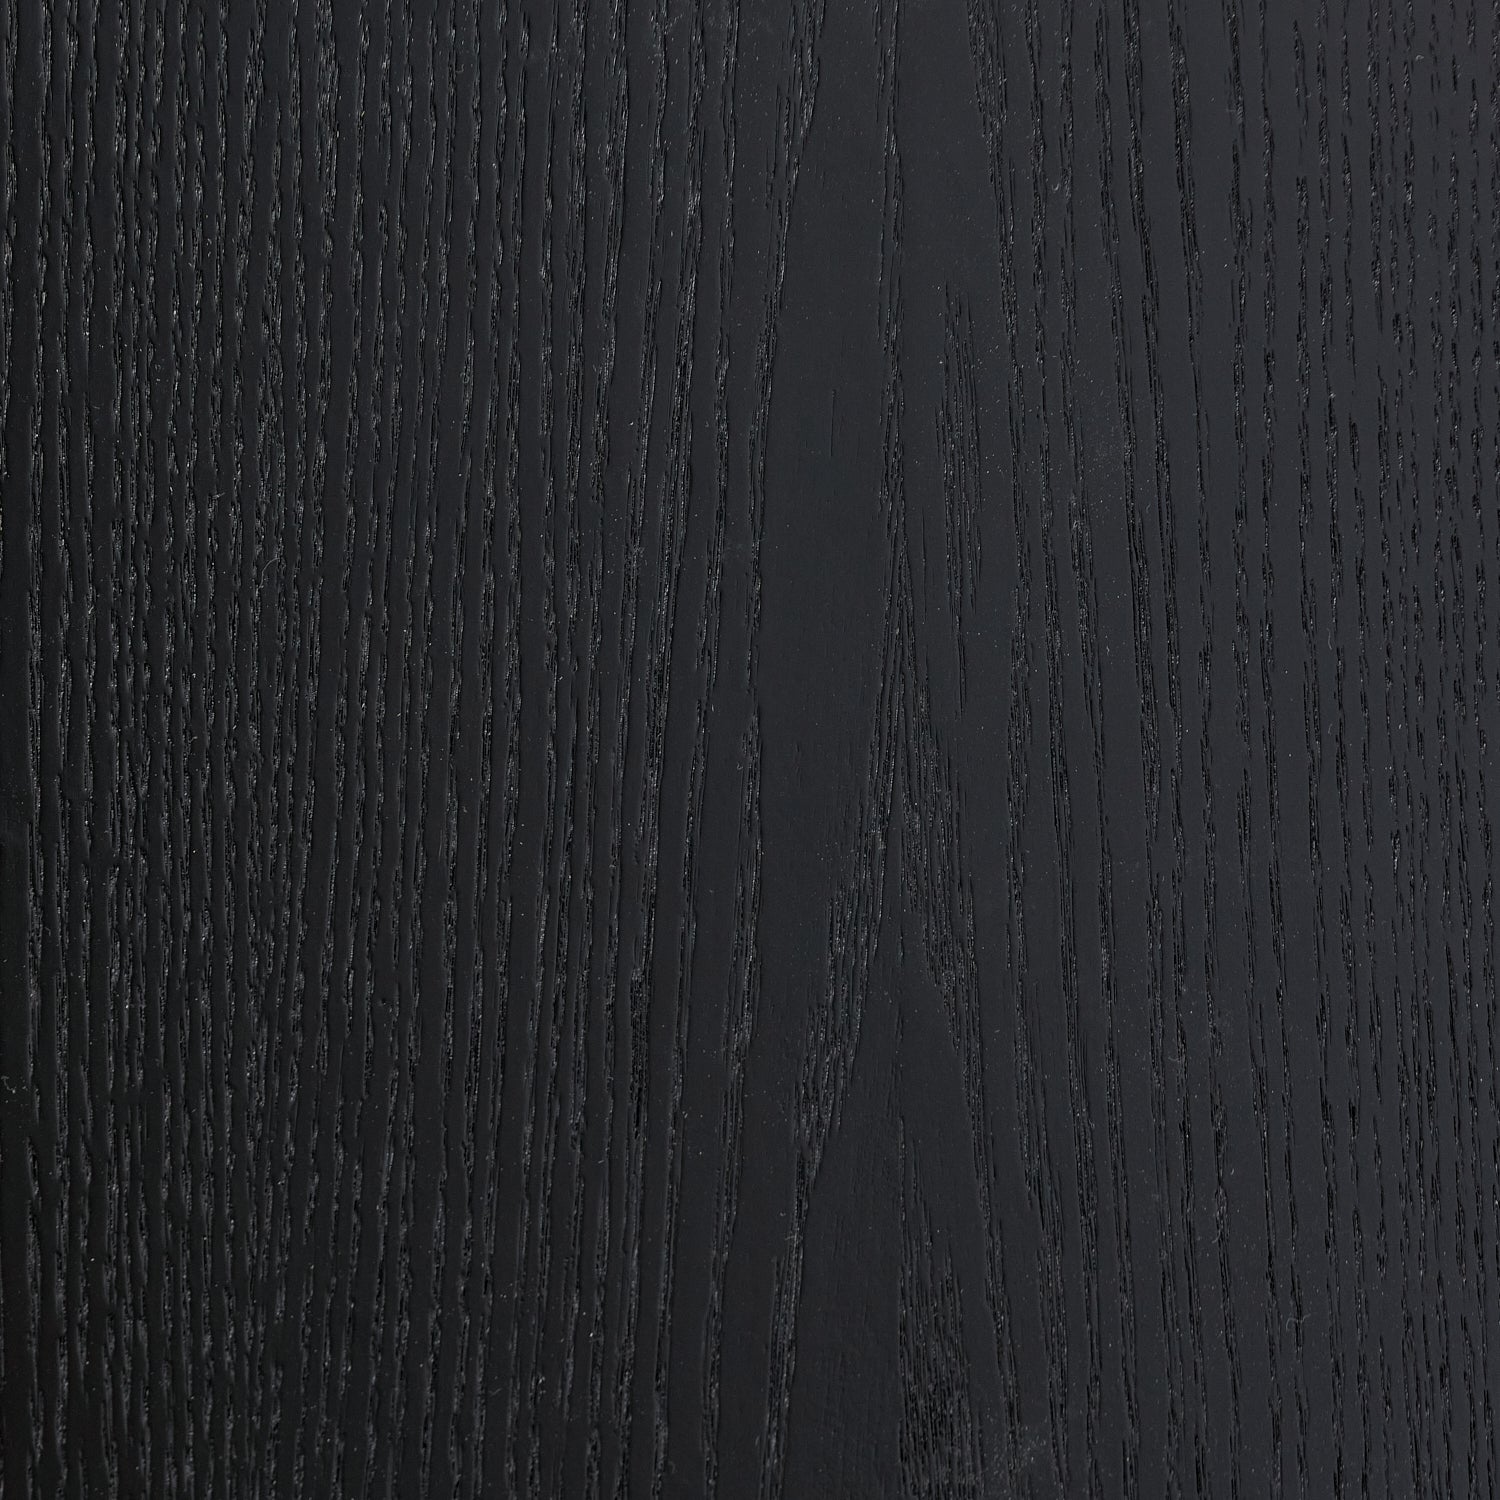 SOKOVET | מזנון עץ בגוון שחור עם ידיות מעוגלות ו-3 תאי אחסון